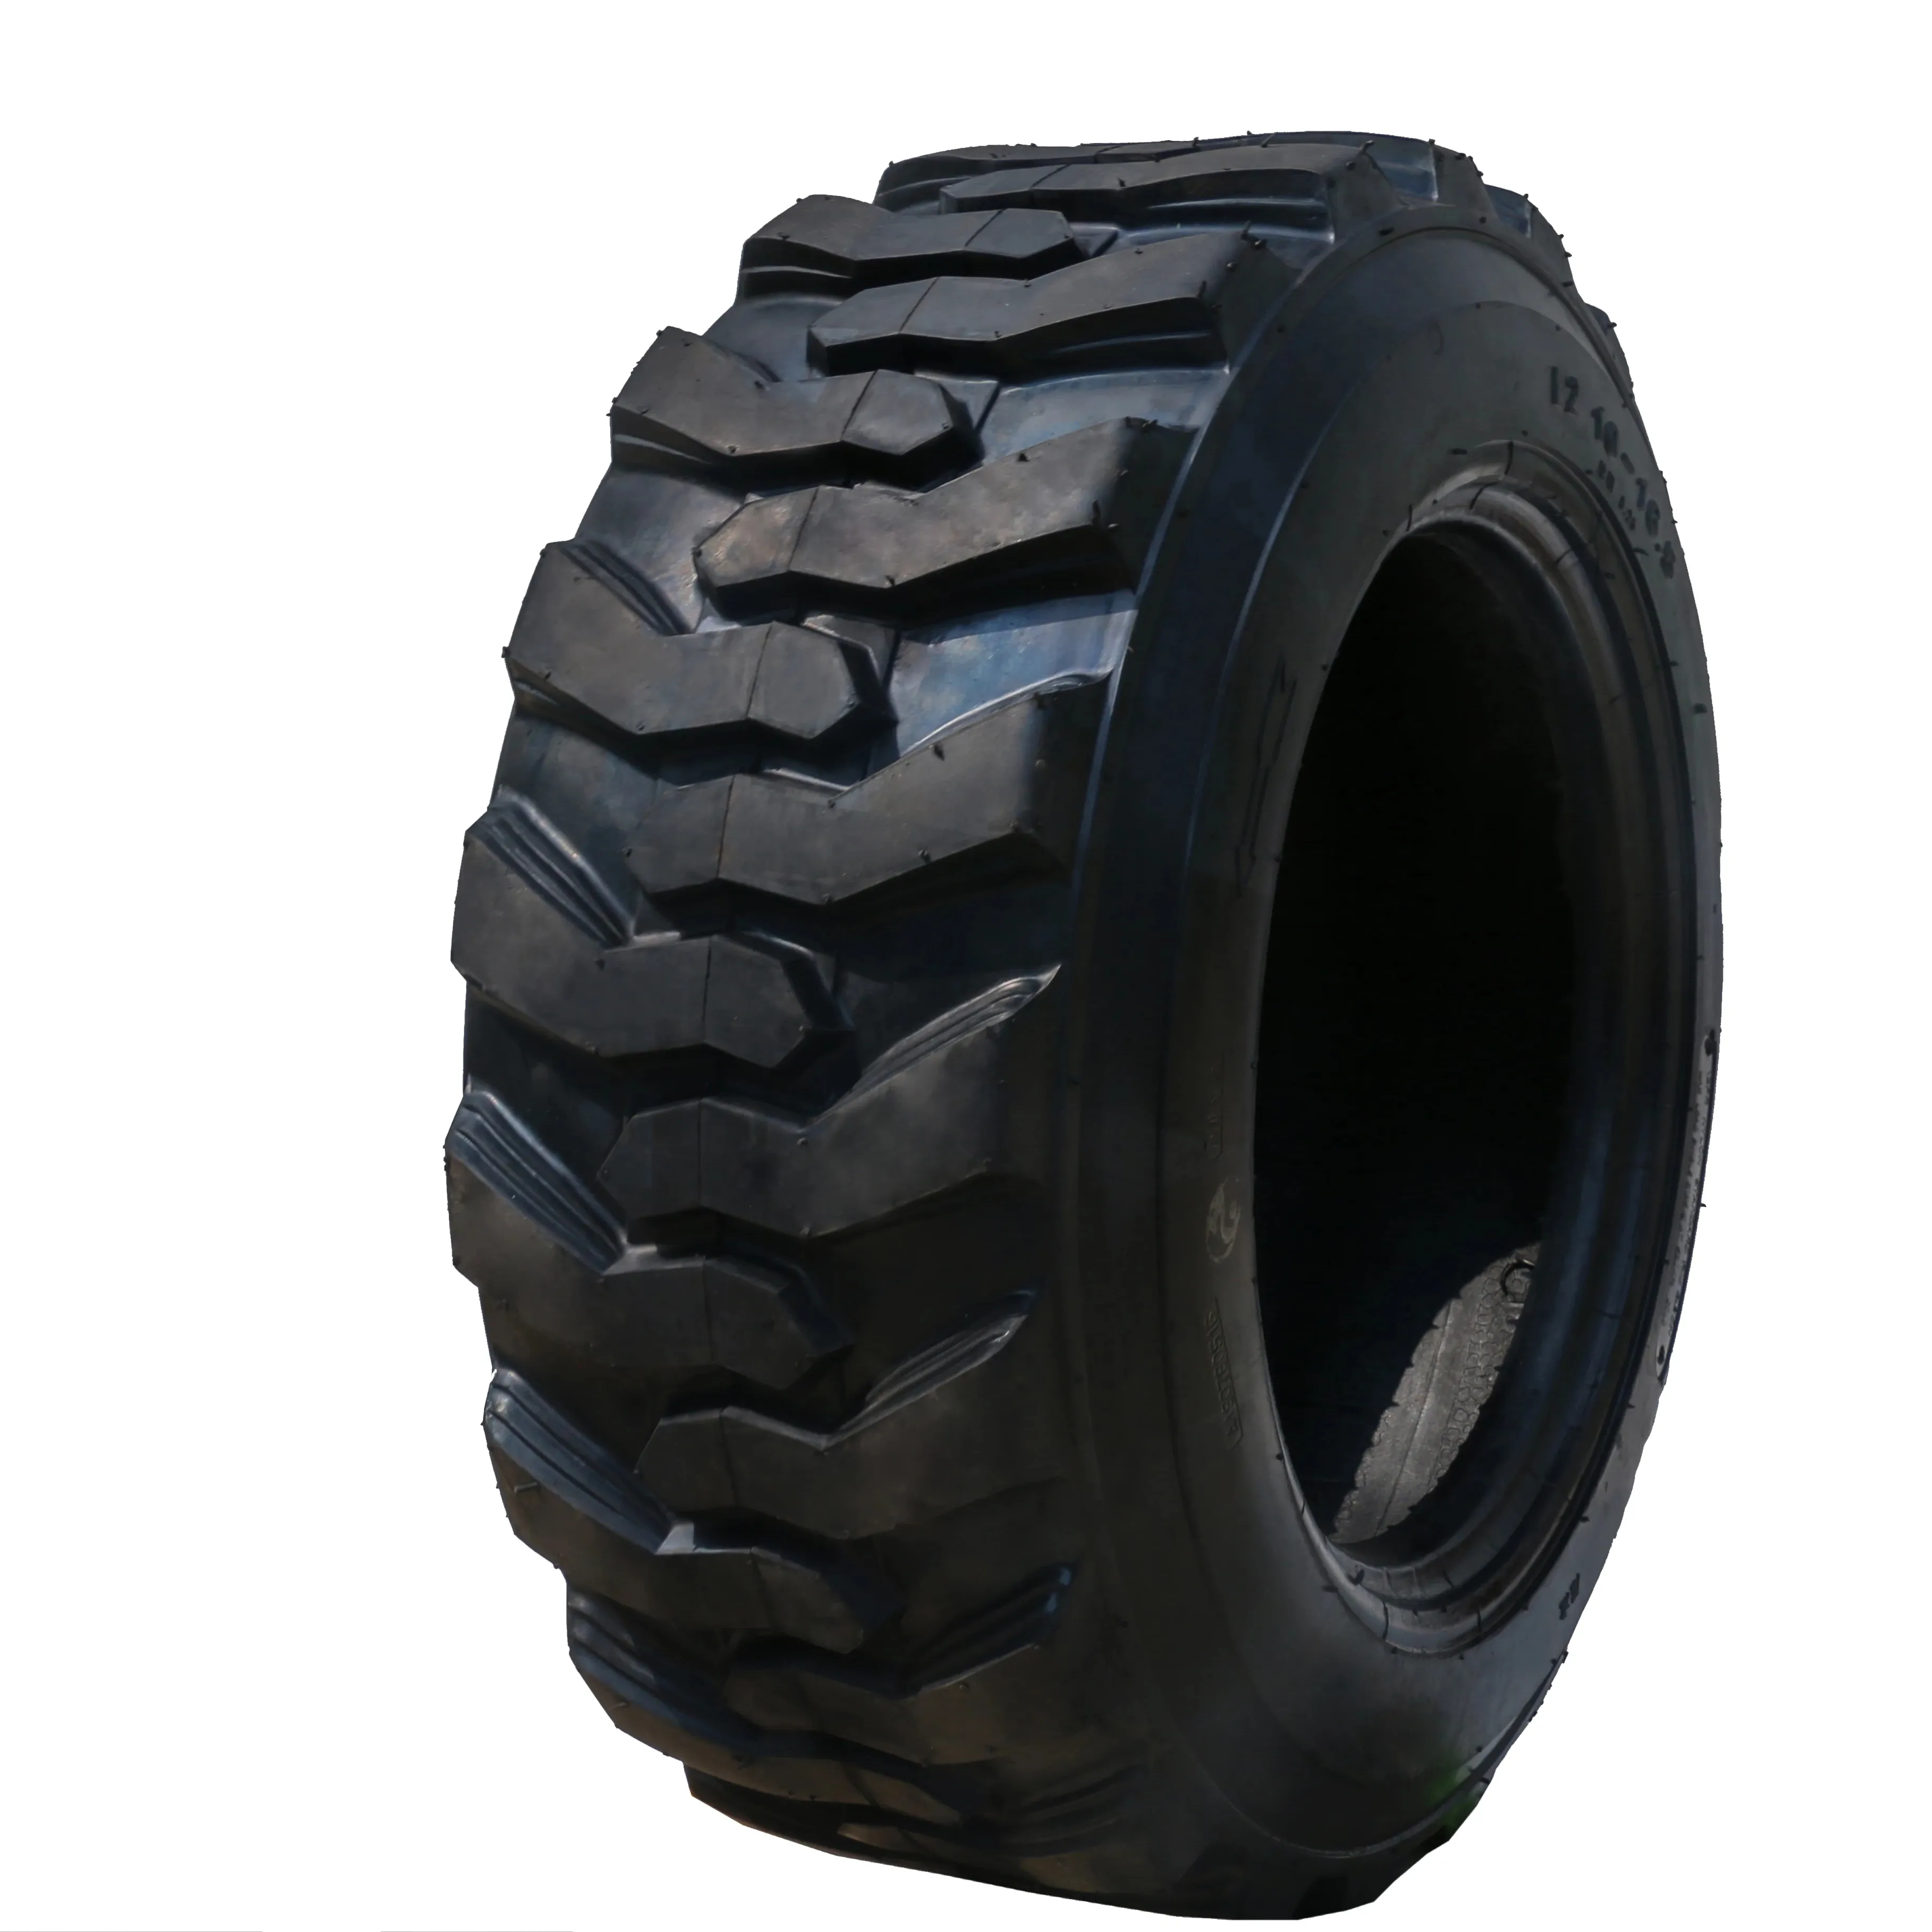 Haute qualité TL 10-16.5 12-16.5 14-17.5 11L-16 SKS-1 Skid Steer Industrial Tyre 10 16.5 skid steer pneus